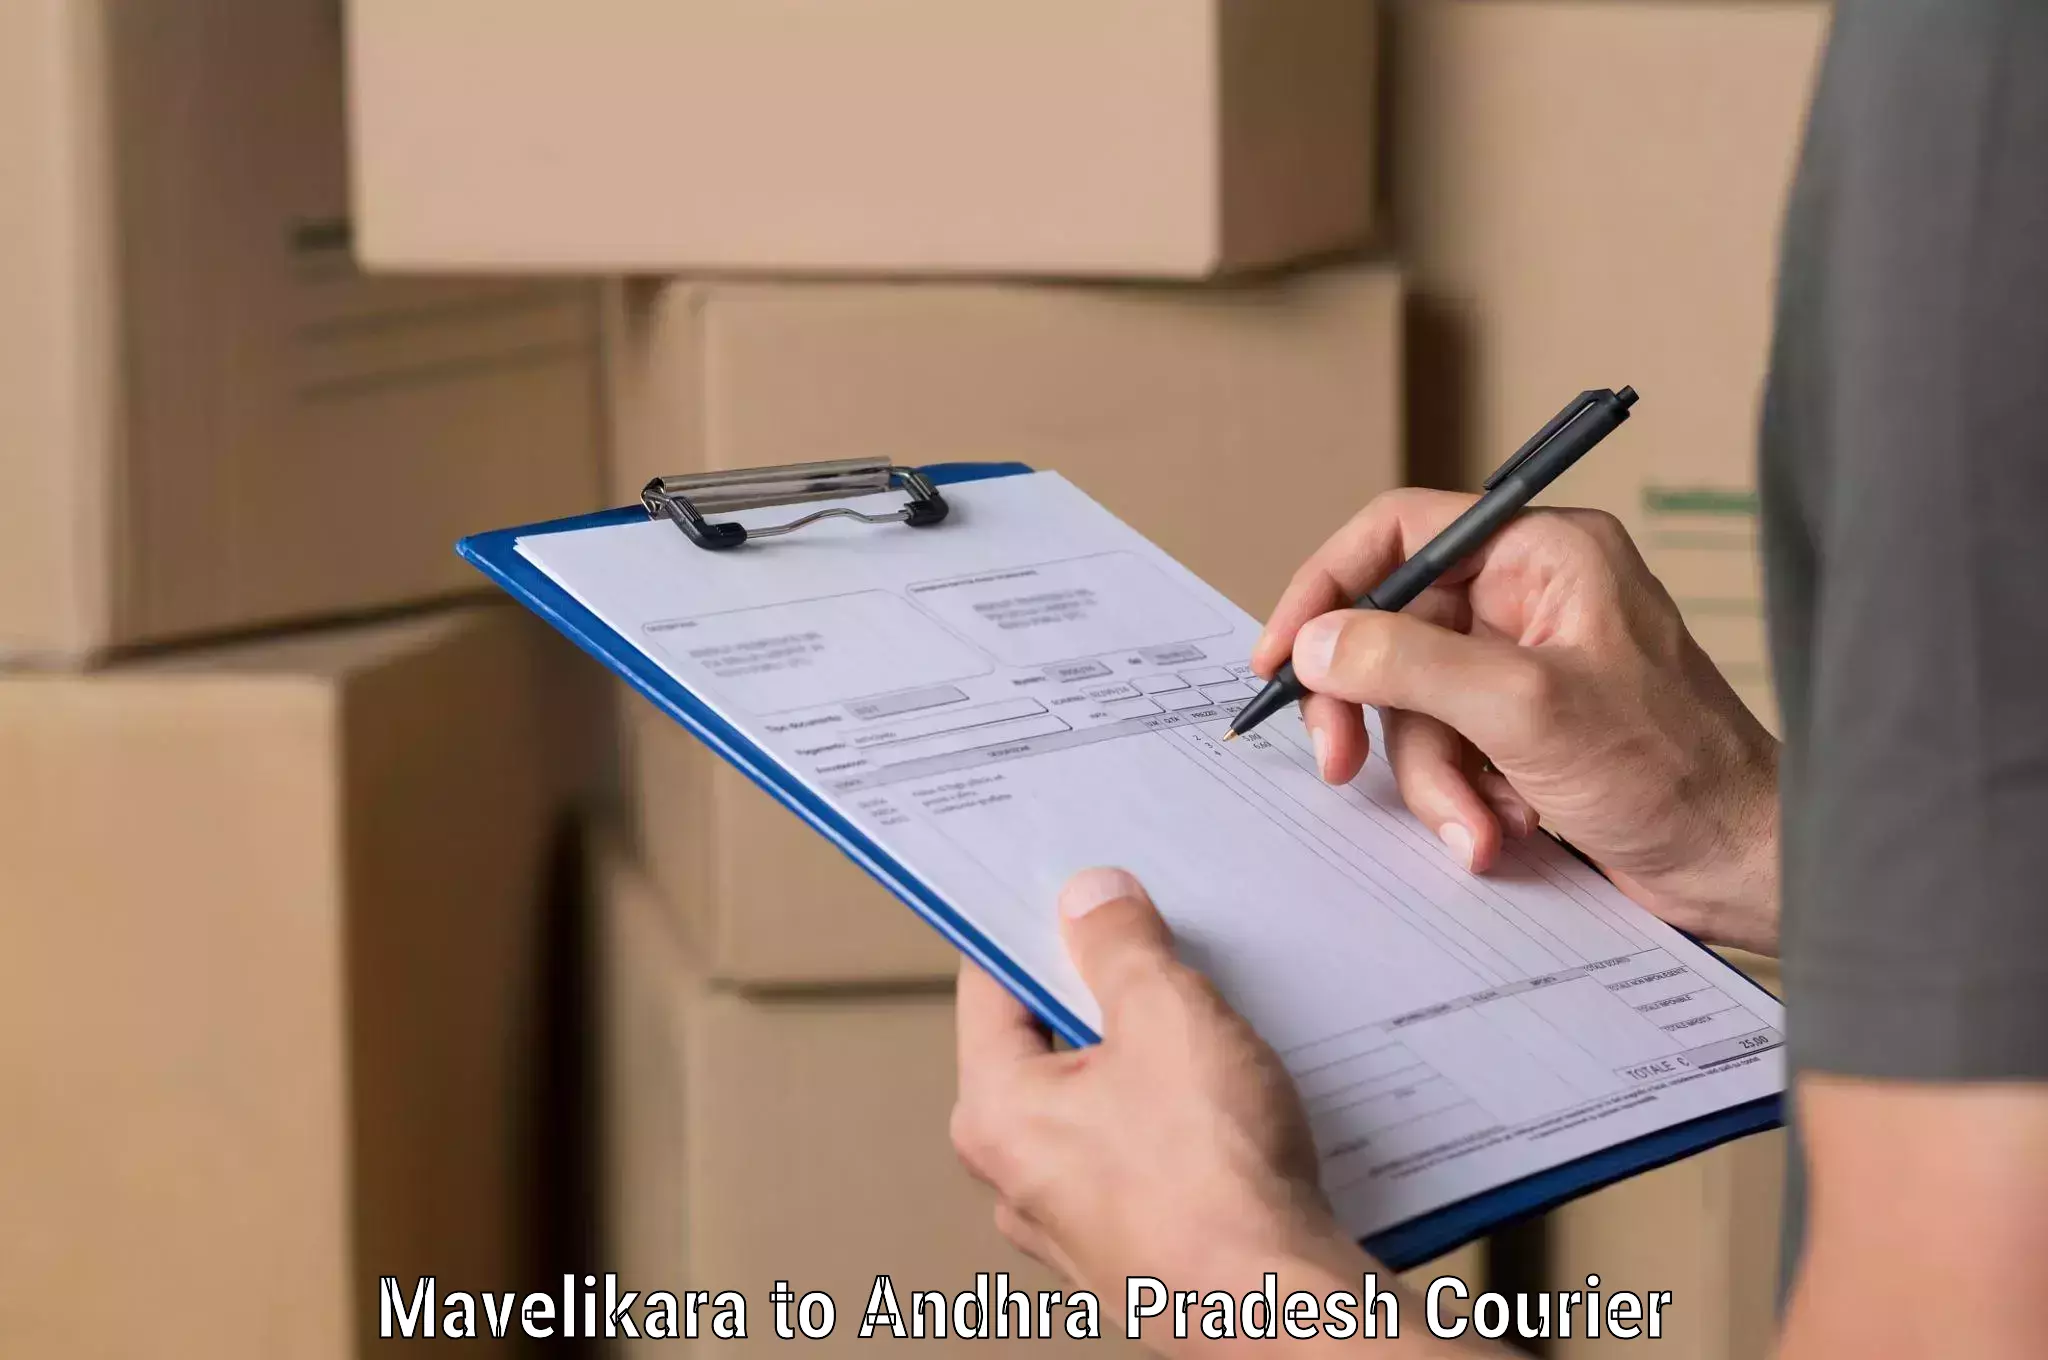 Package delivery network Mavelikara to Mulakalacheruvu